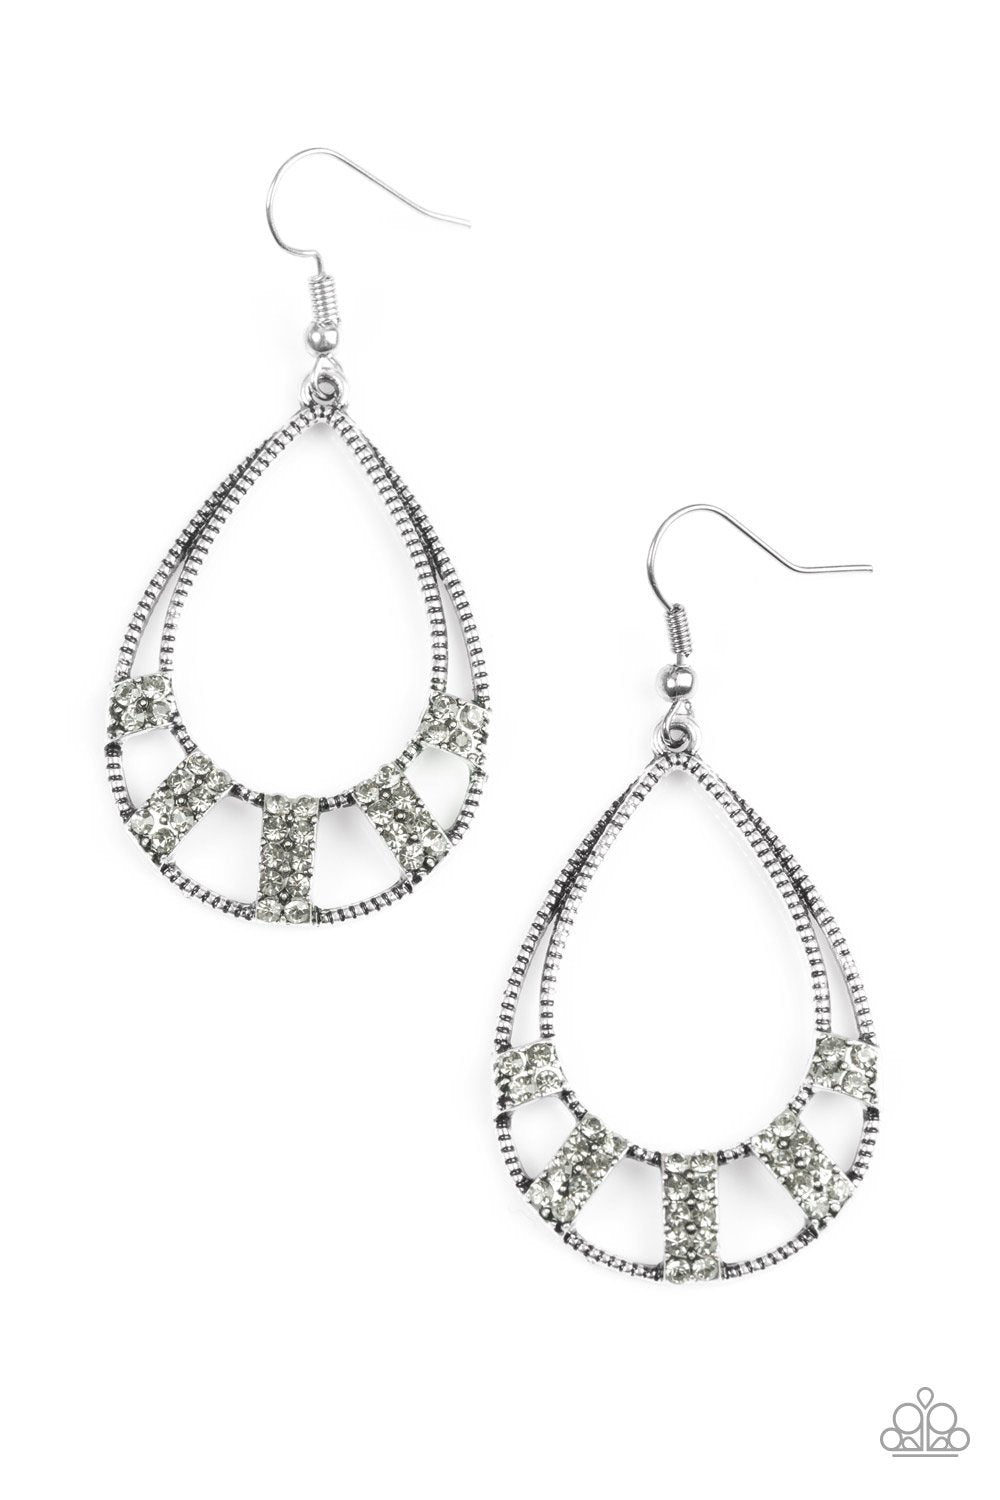 Trillion Dollar Teardrops Silver Earrings - Paparazzi Accessories-CarasShop.com - $5 Jewelry by Cara Jewels